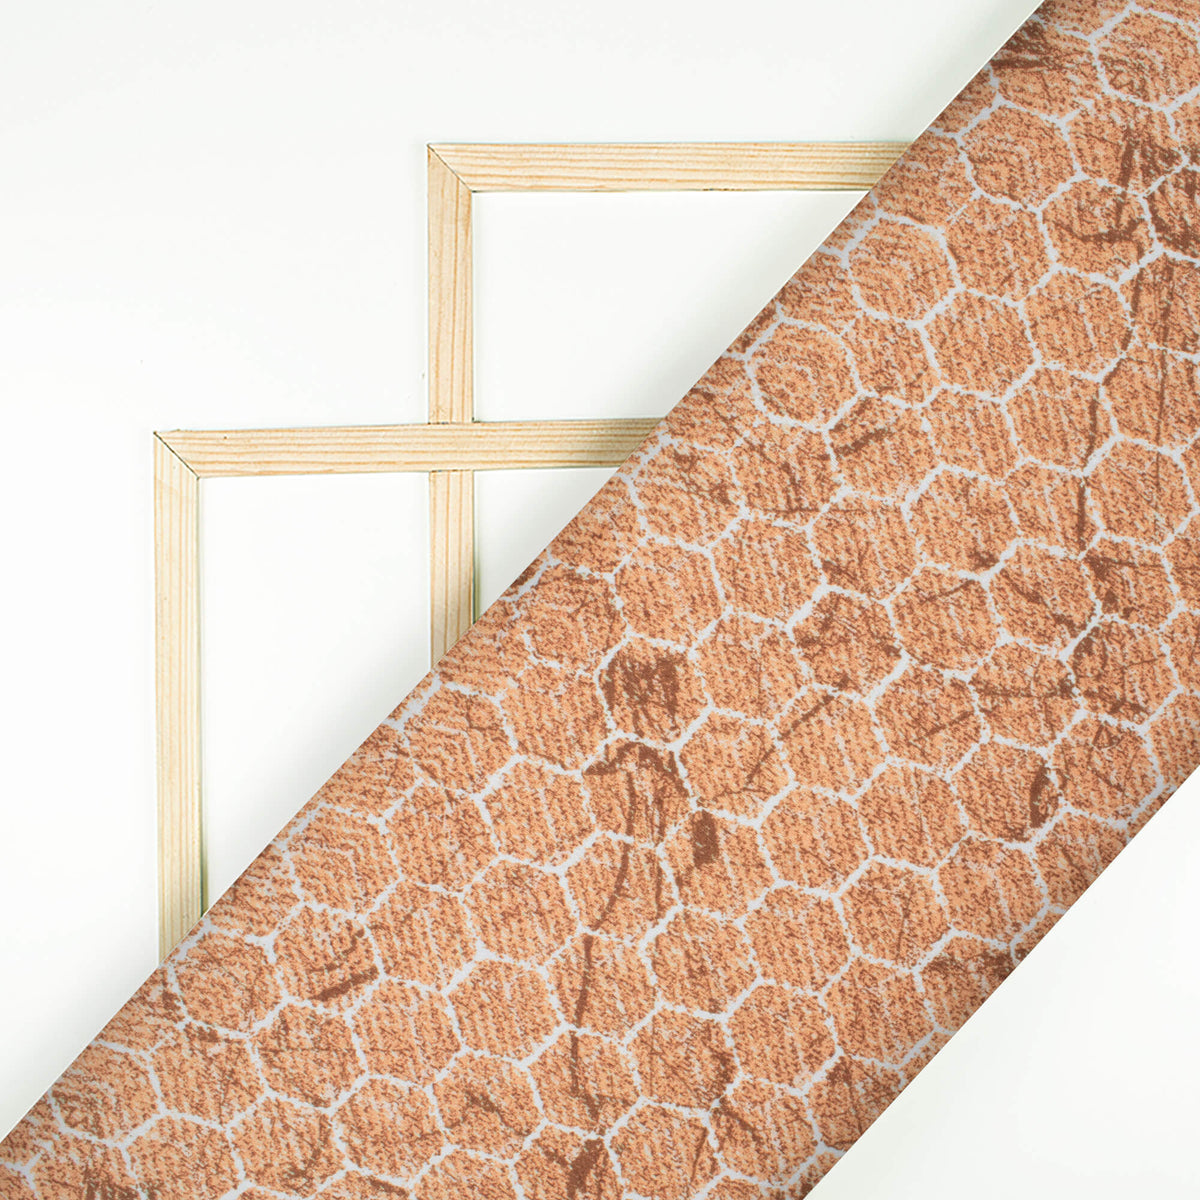 Sable Brown And White Geometric Pattern Digital Print Premium Lush Satin Fabric